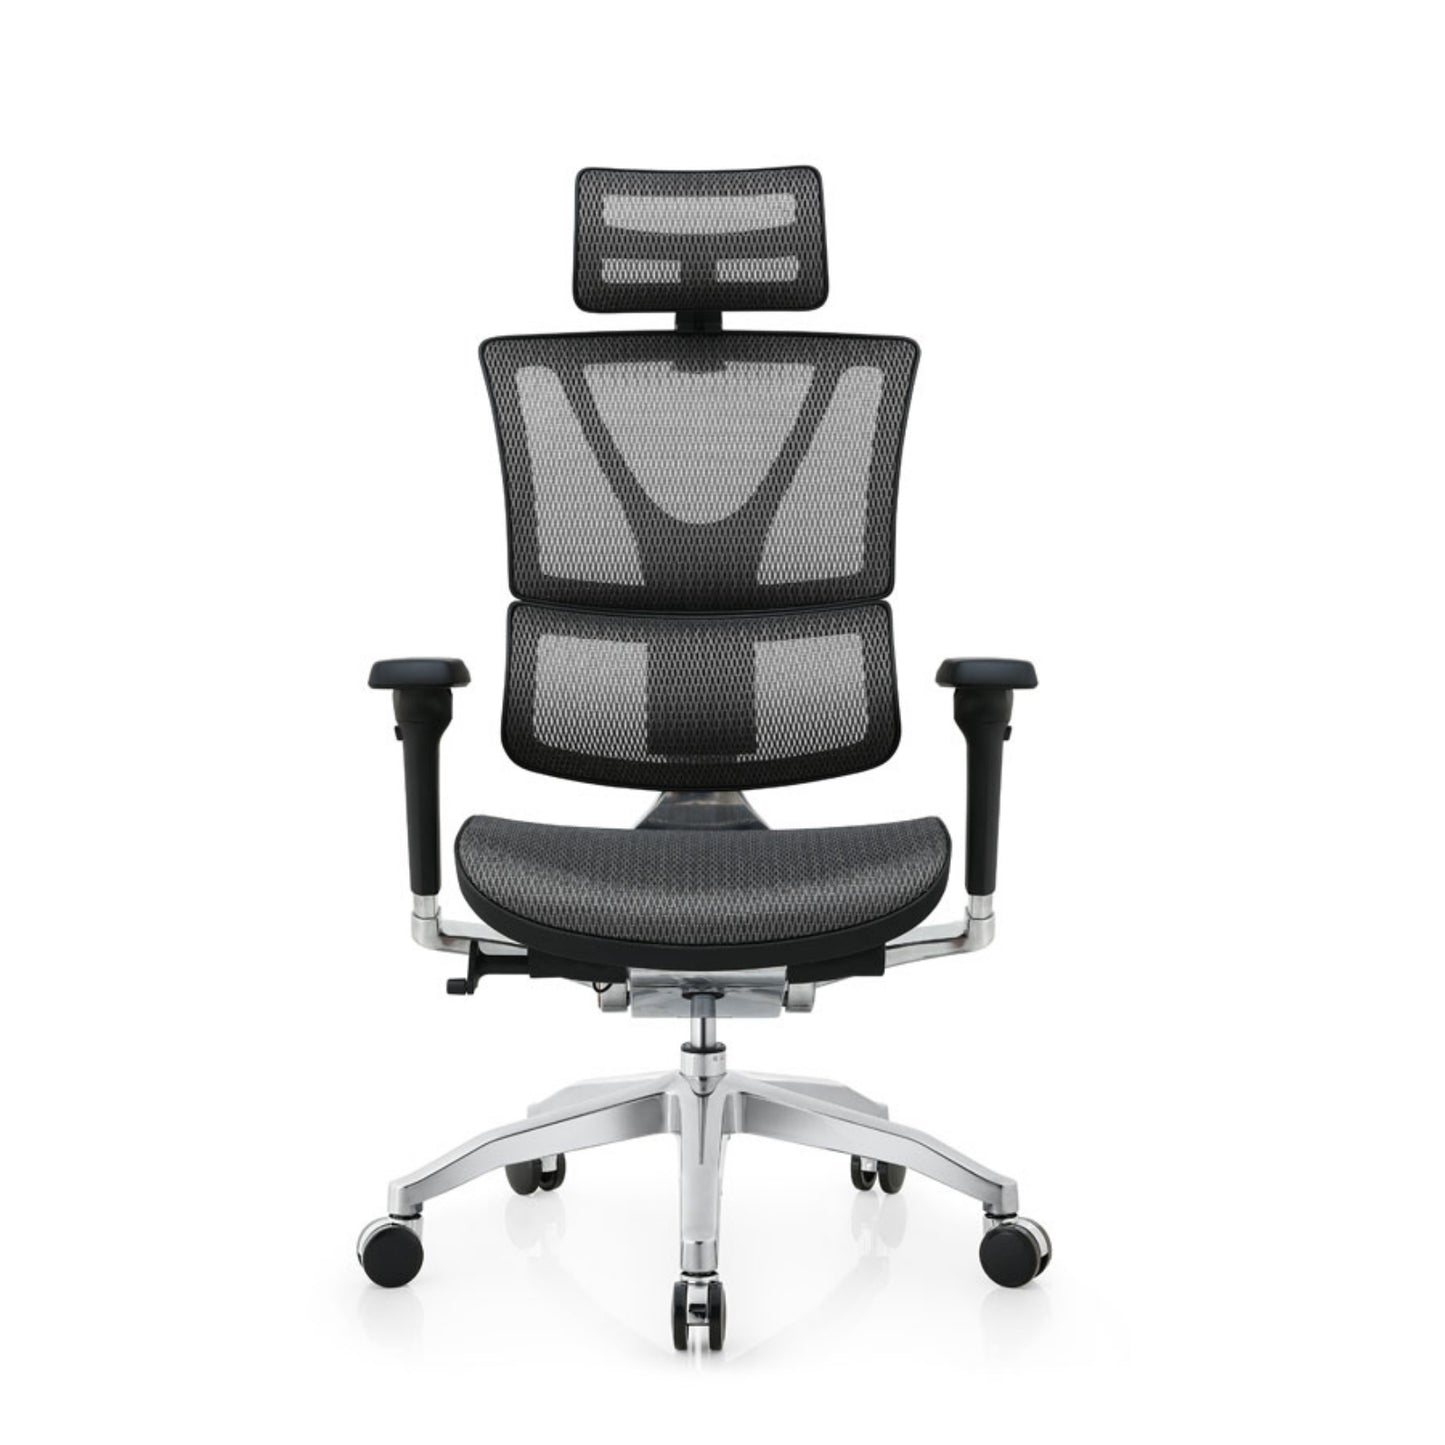 Sihoo M25 Ergonomic Chair